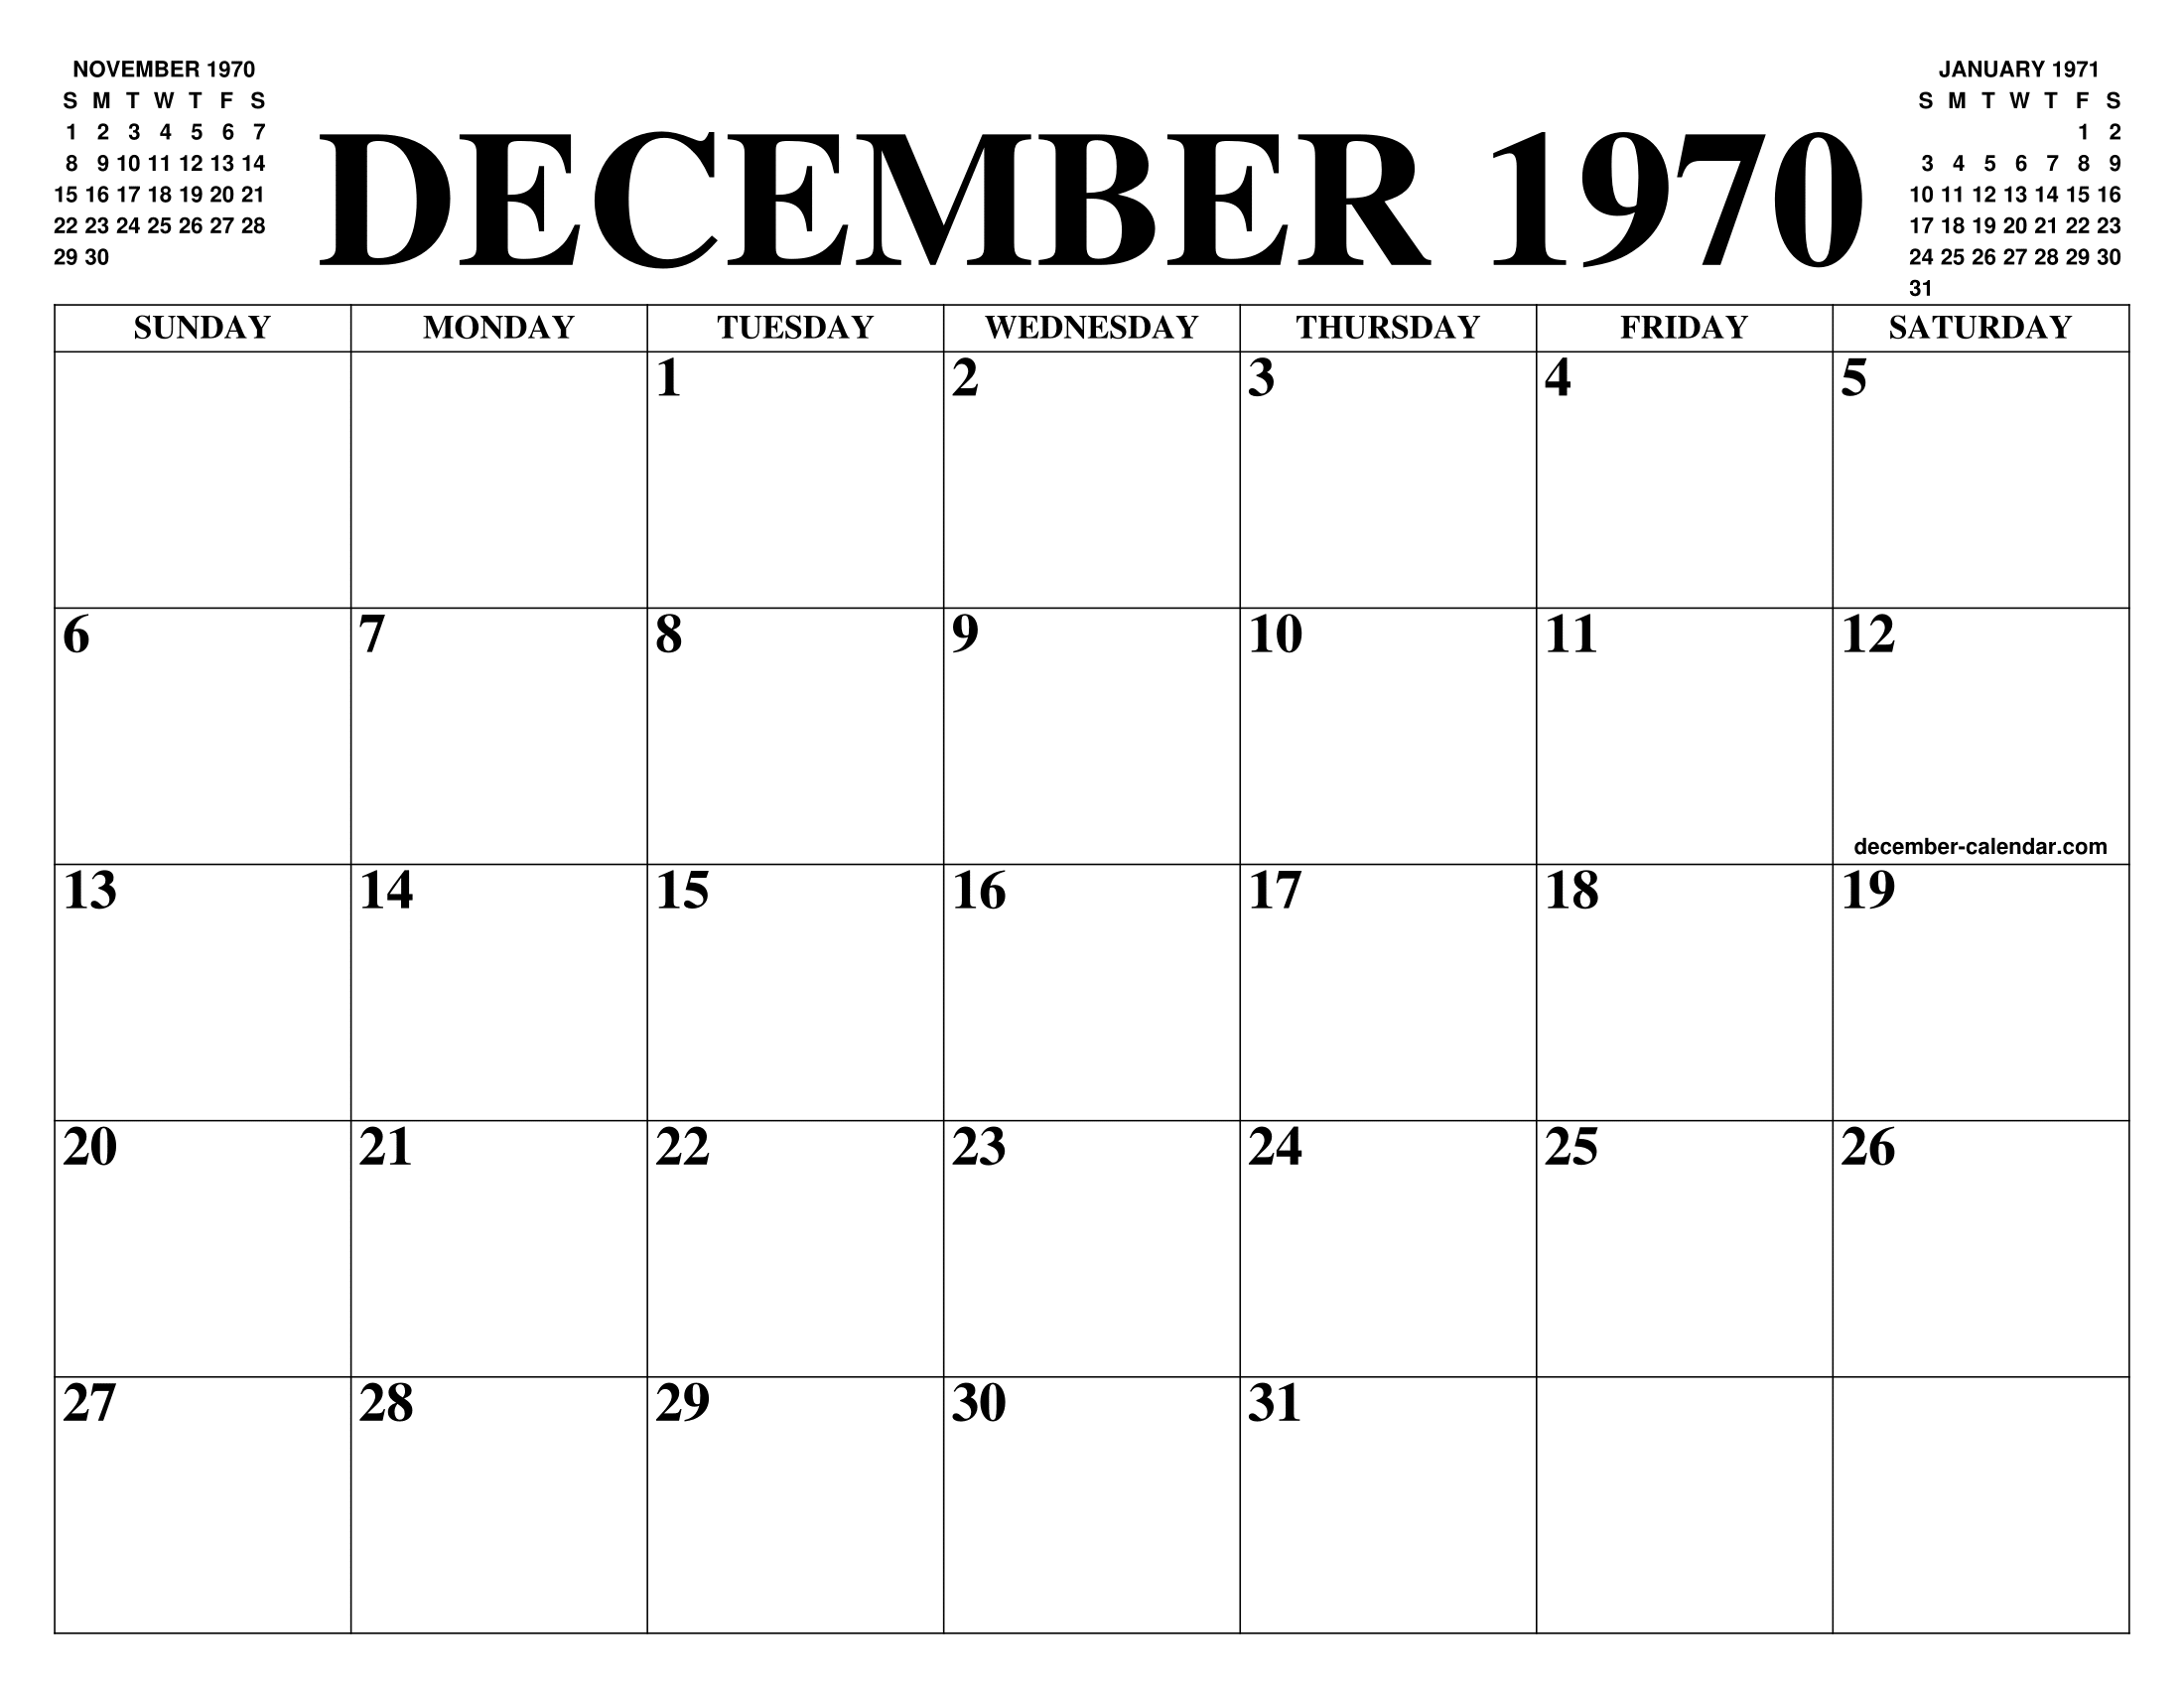 DECEMBER 1970 CALENDAR OF THE MONTH: FREE PRINTABLE DECEMBER CALENDAR